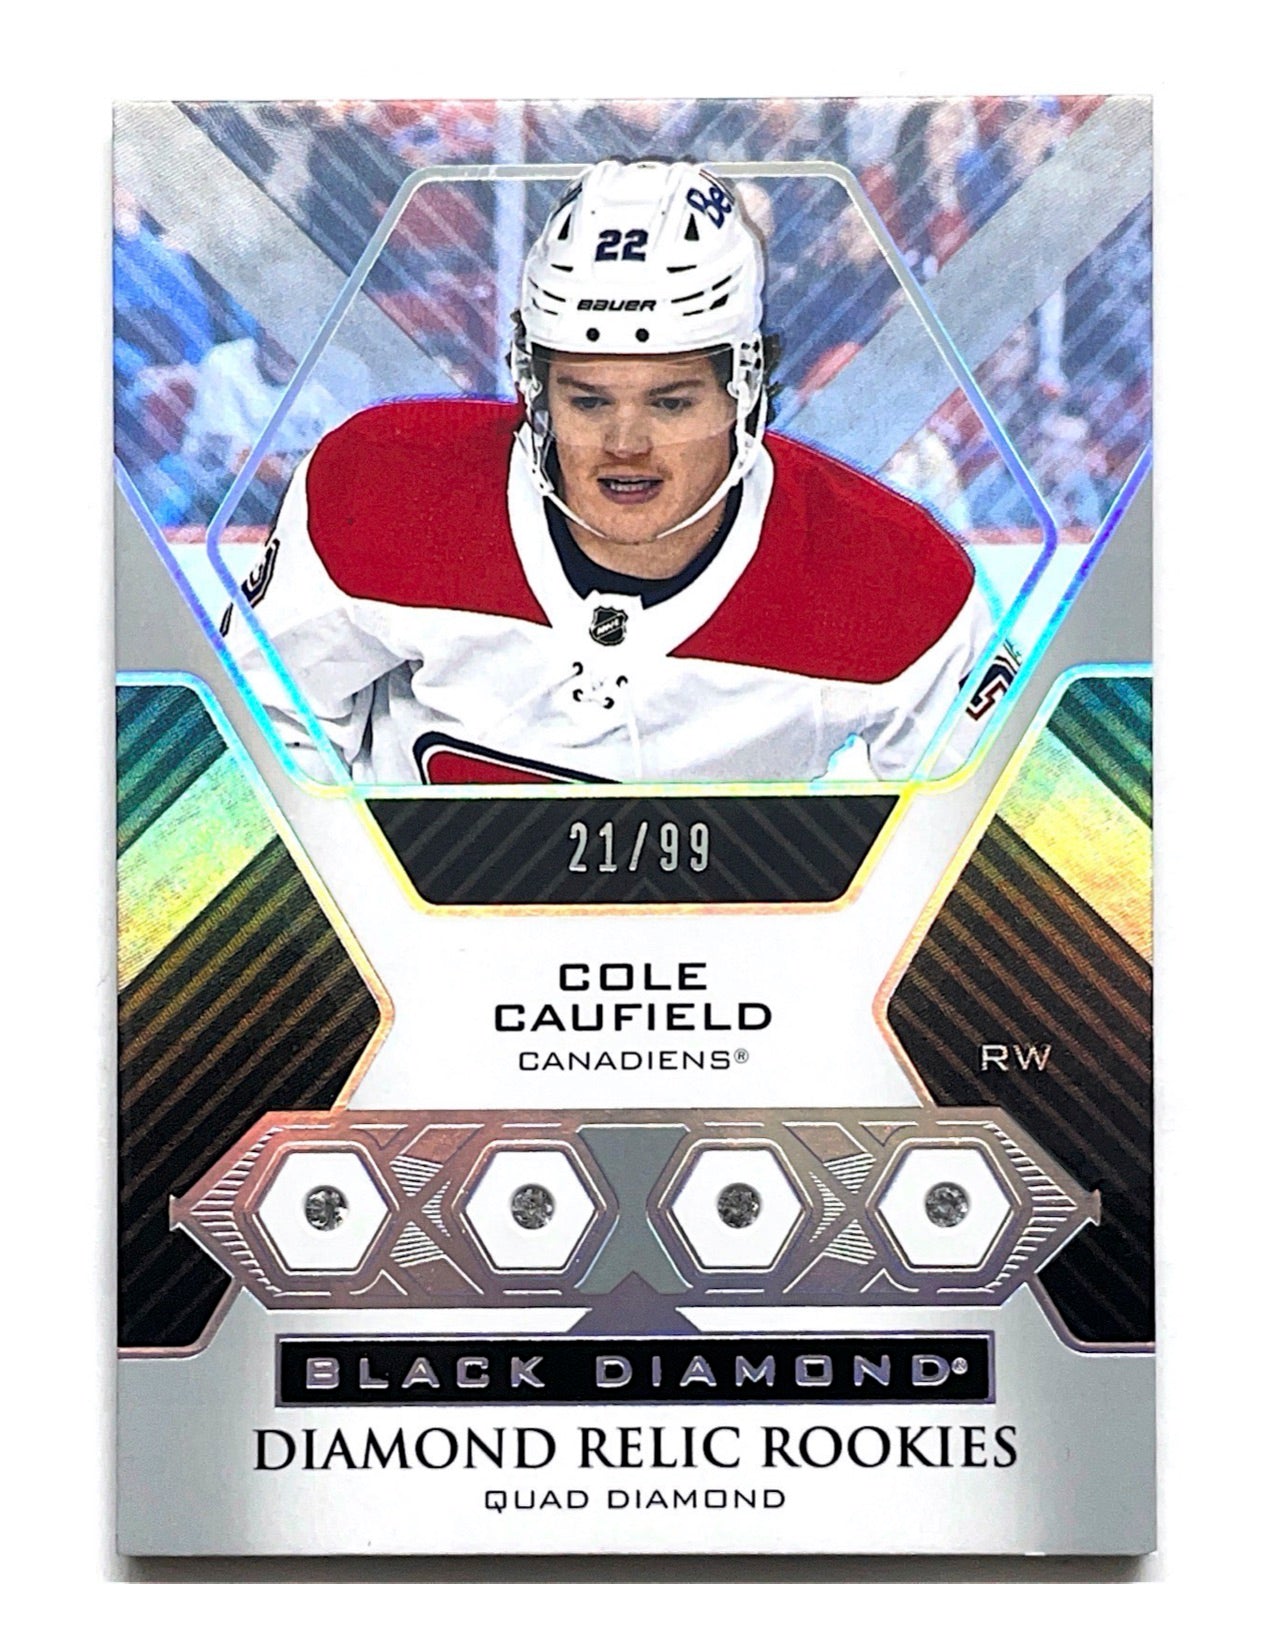 Cole Caufield 2021-22 Upper Deck Black Diamond Quad Diamond Relic Rookies #BDR-CC - 21/99